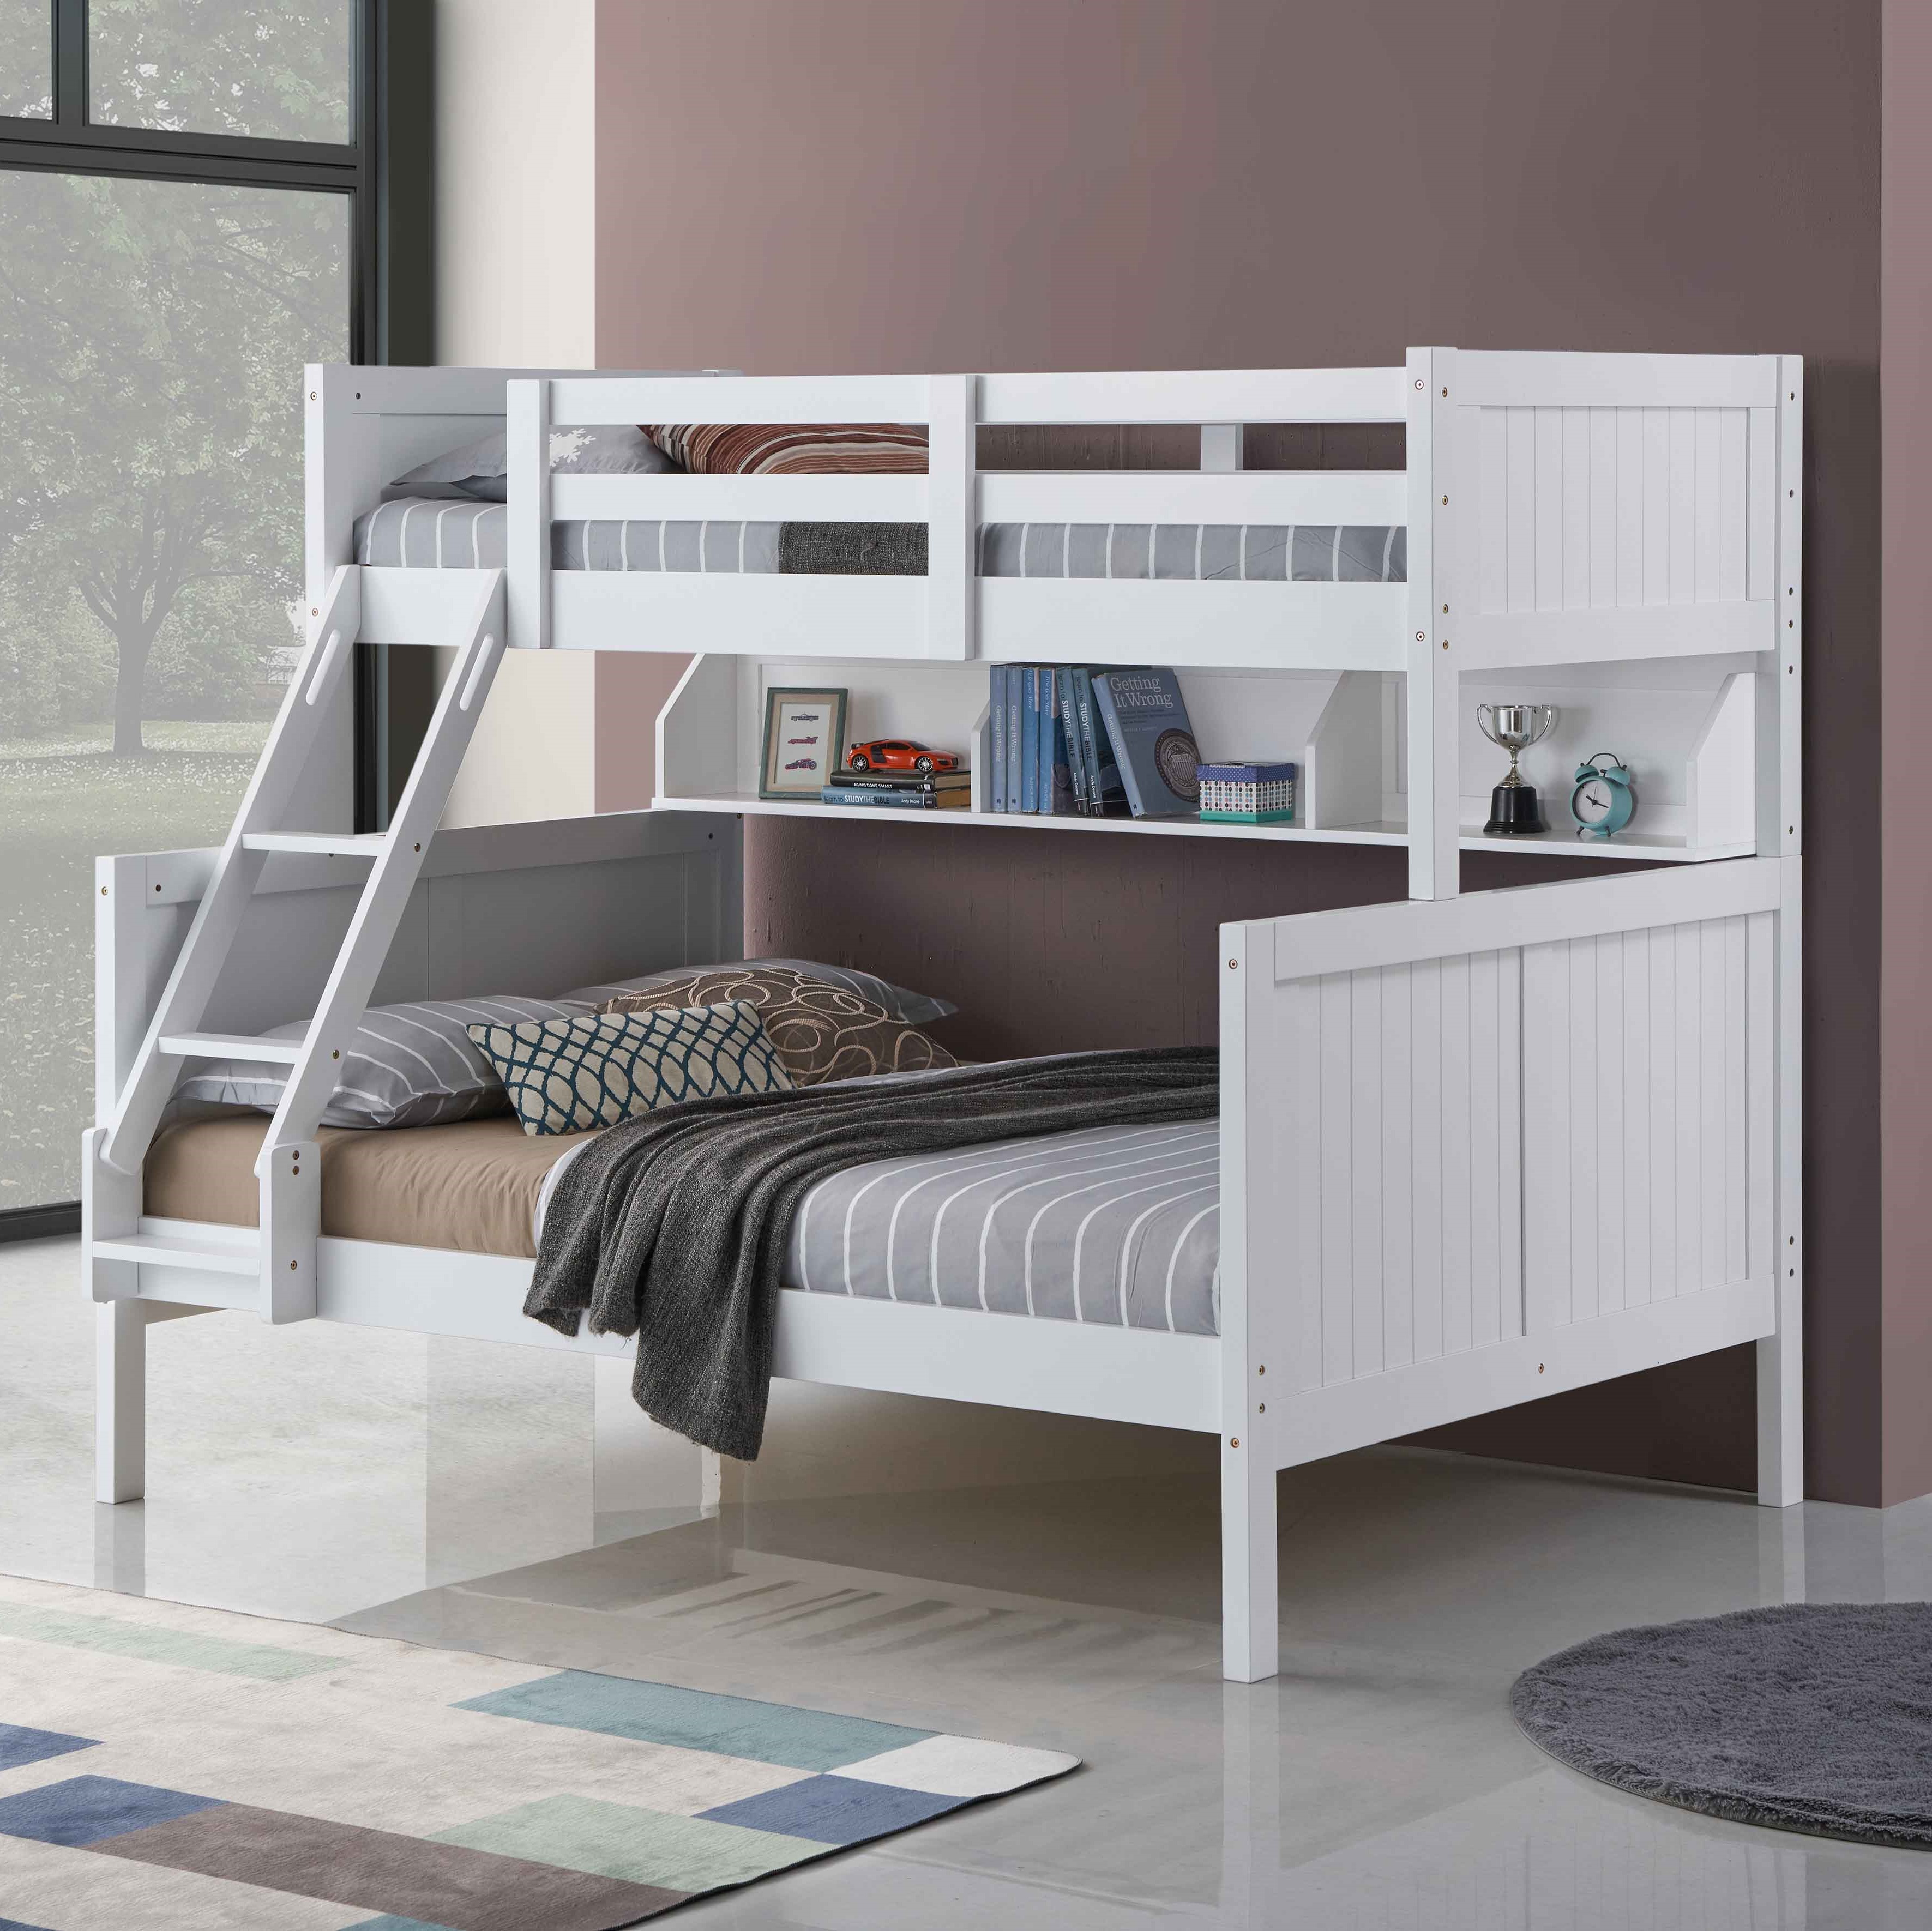 Double Bunk Bed Storage Trundle, Jordan’s Furniture Bunk Beds